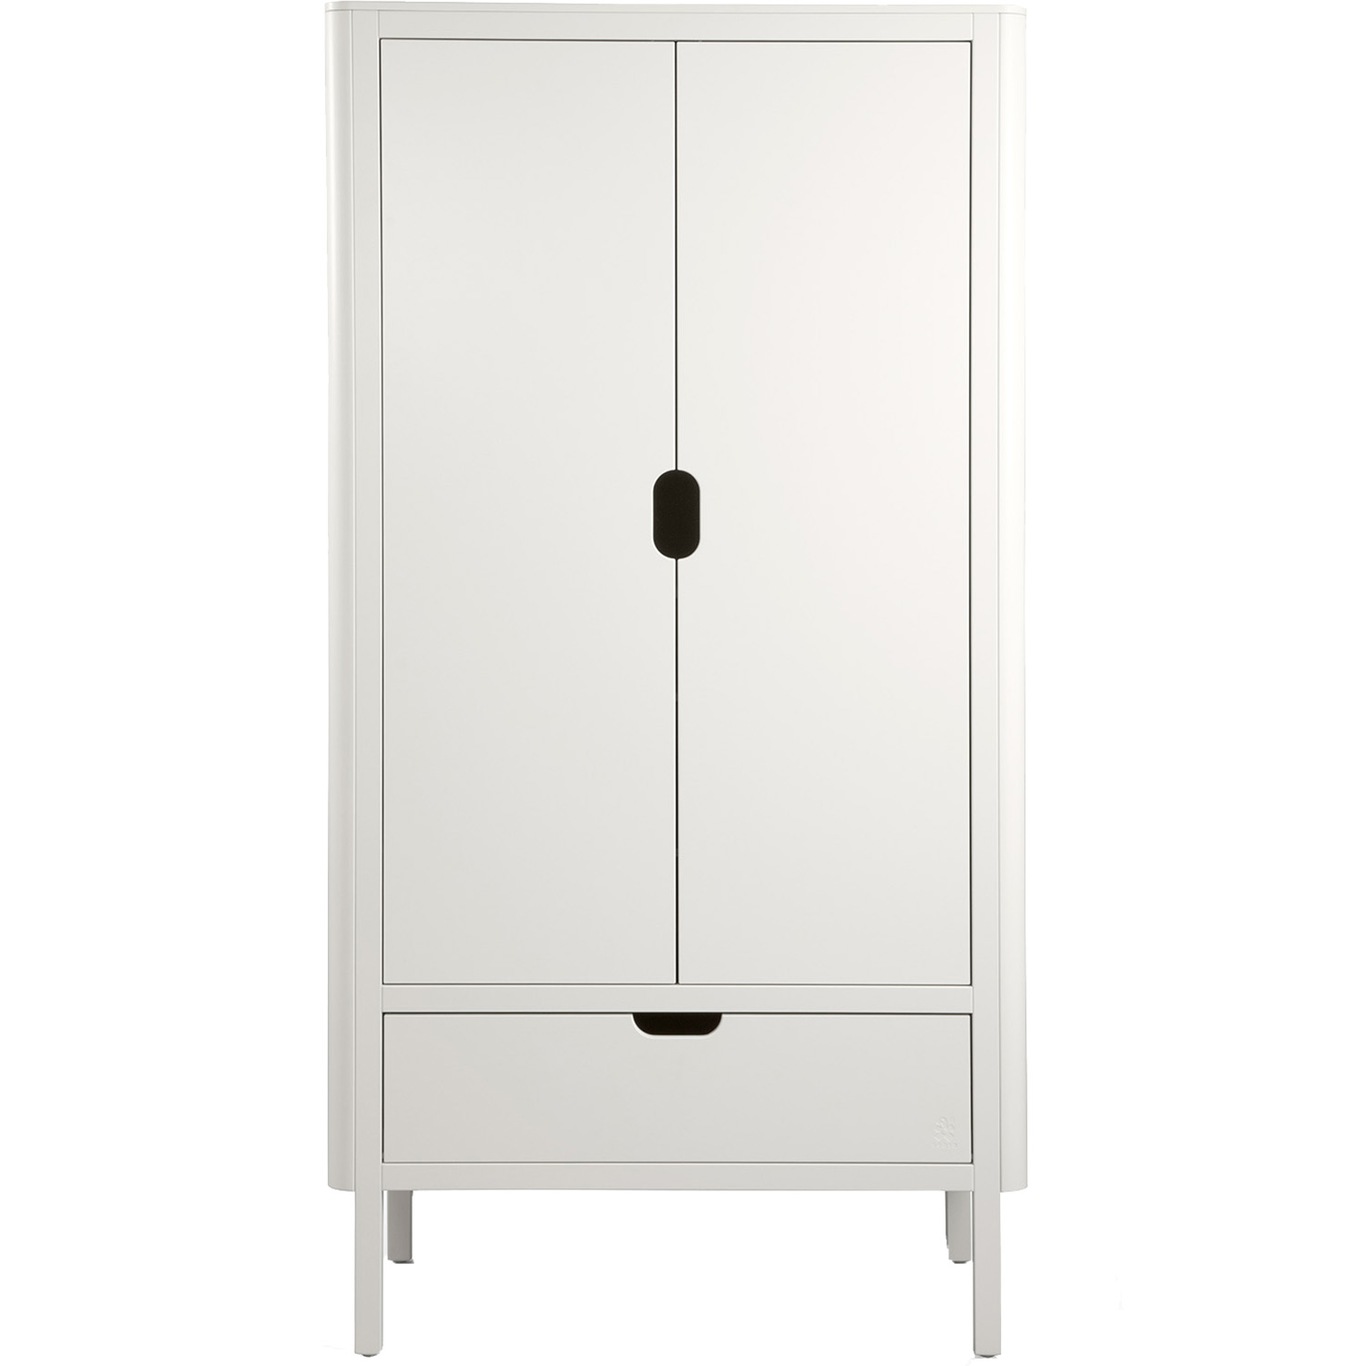 Garderob Med Två Dörrar, Classic White